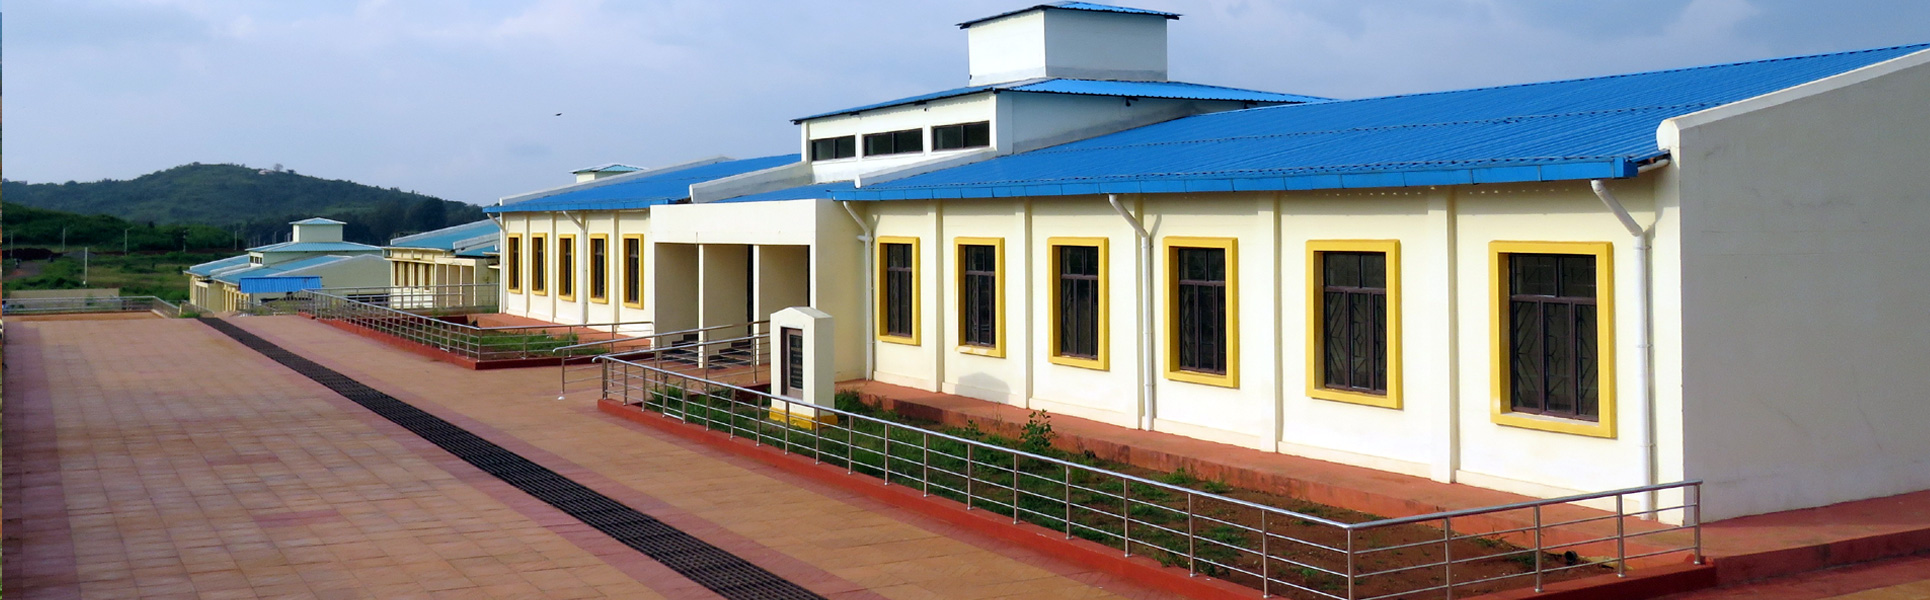 Central University of Odisha, Academic Block